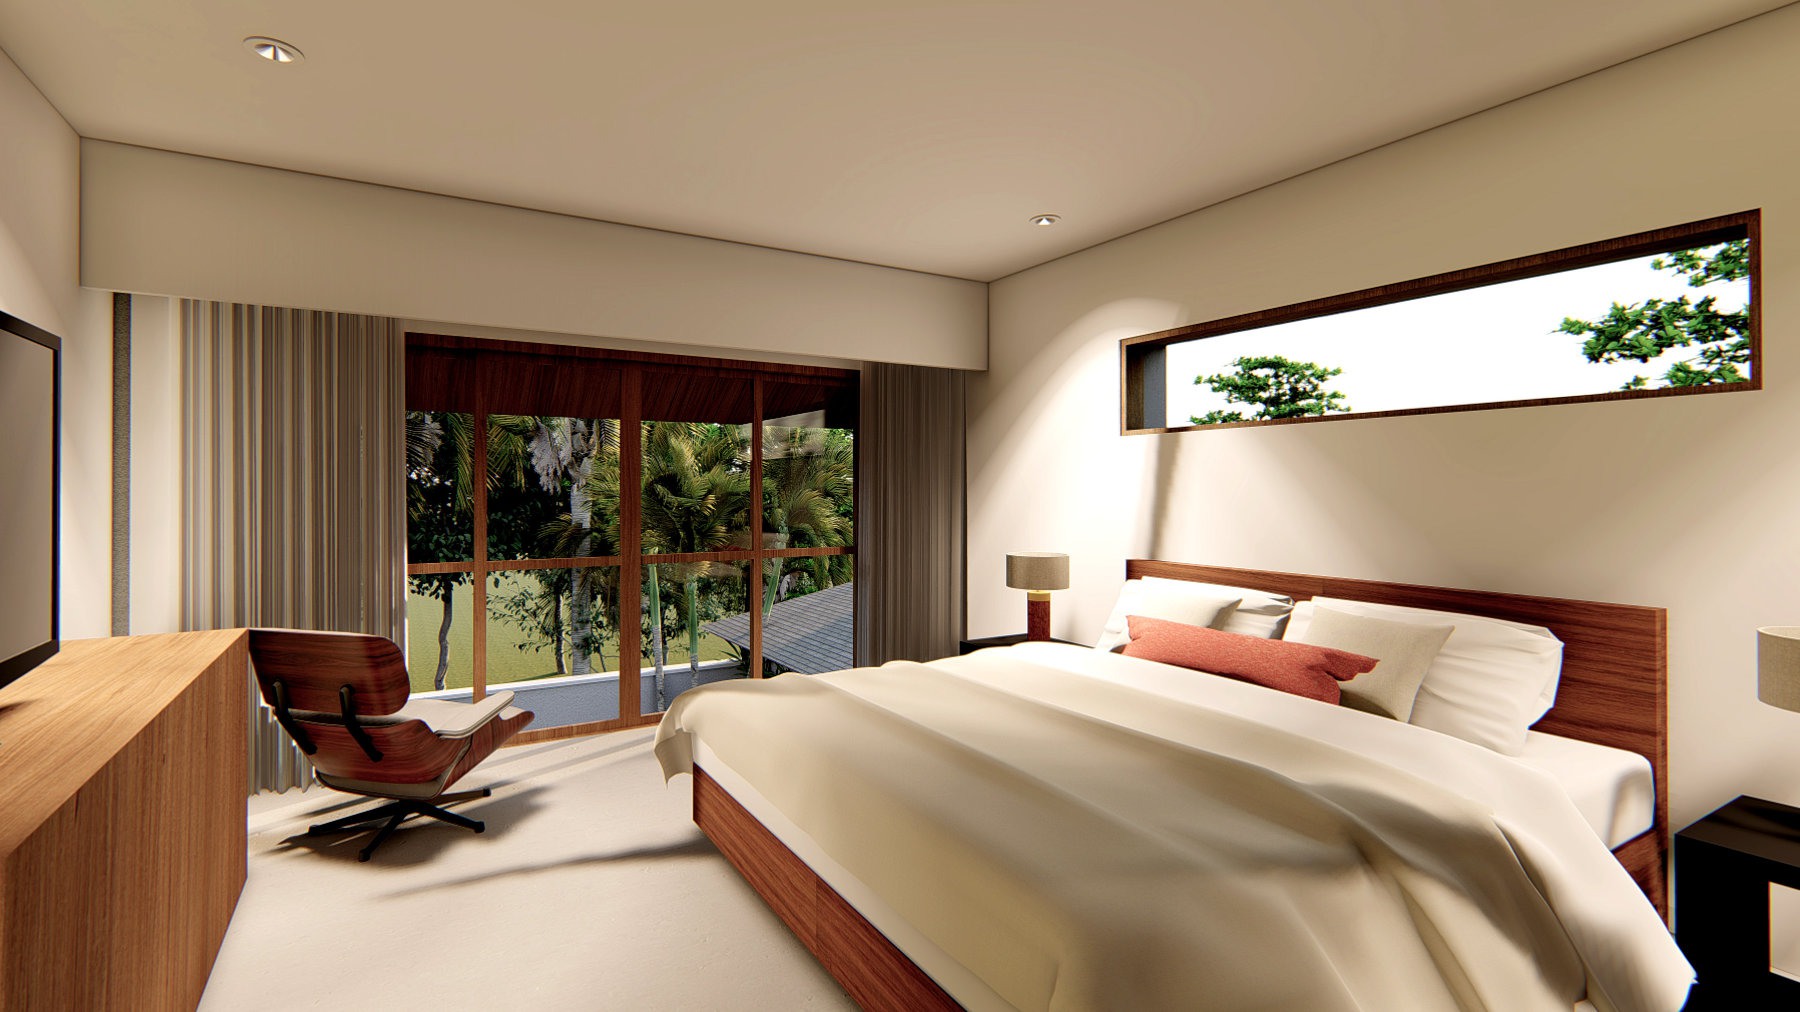 Design Assembly - Cepaka Villa - Bali Architect - Interior Design - Bali Villa - Bedroom